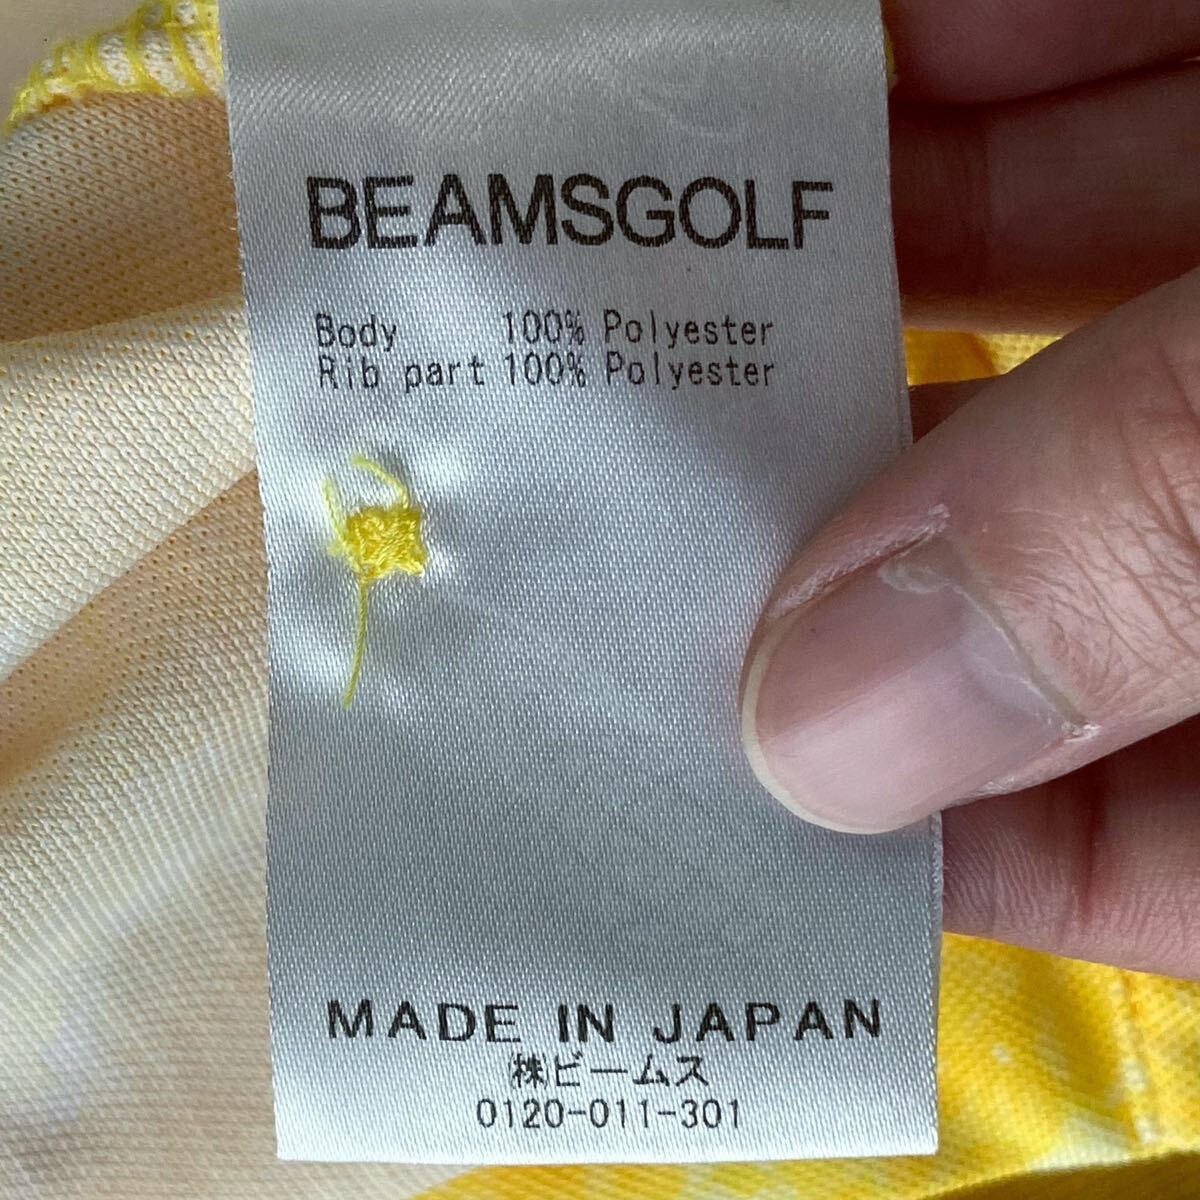 BEAMS GOLF ビームスゴルフ ポリエステル 鹿の子 吸汗速乾 ドライ 胸 刺繍 ロゴ ポロシャツ size.M イエロー 総柄 ゴルフウェア_画像9